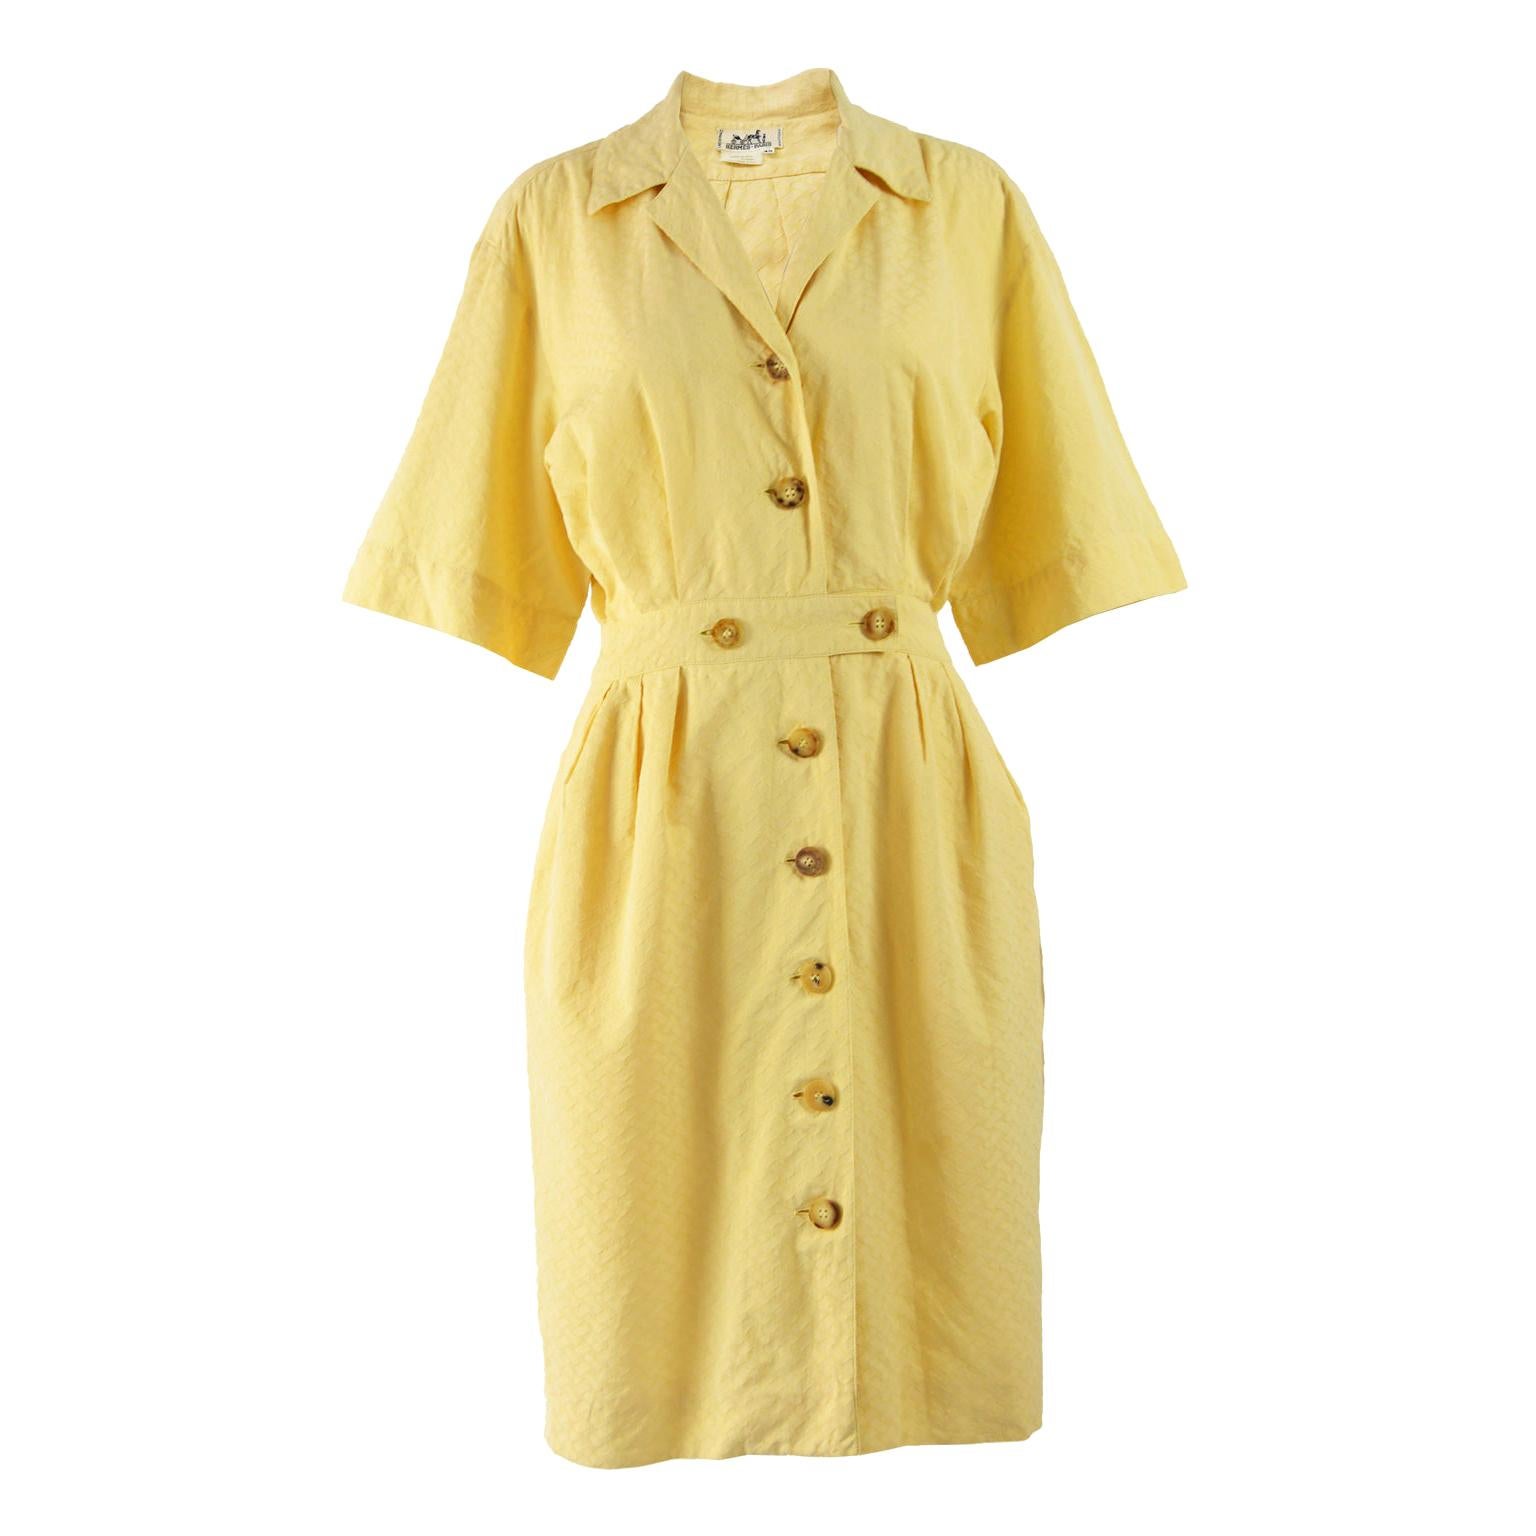 Hermés 1980s Vintage Yellow Cotton Day Dress